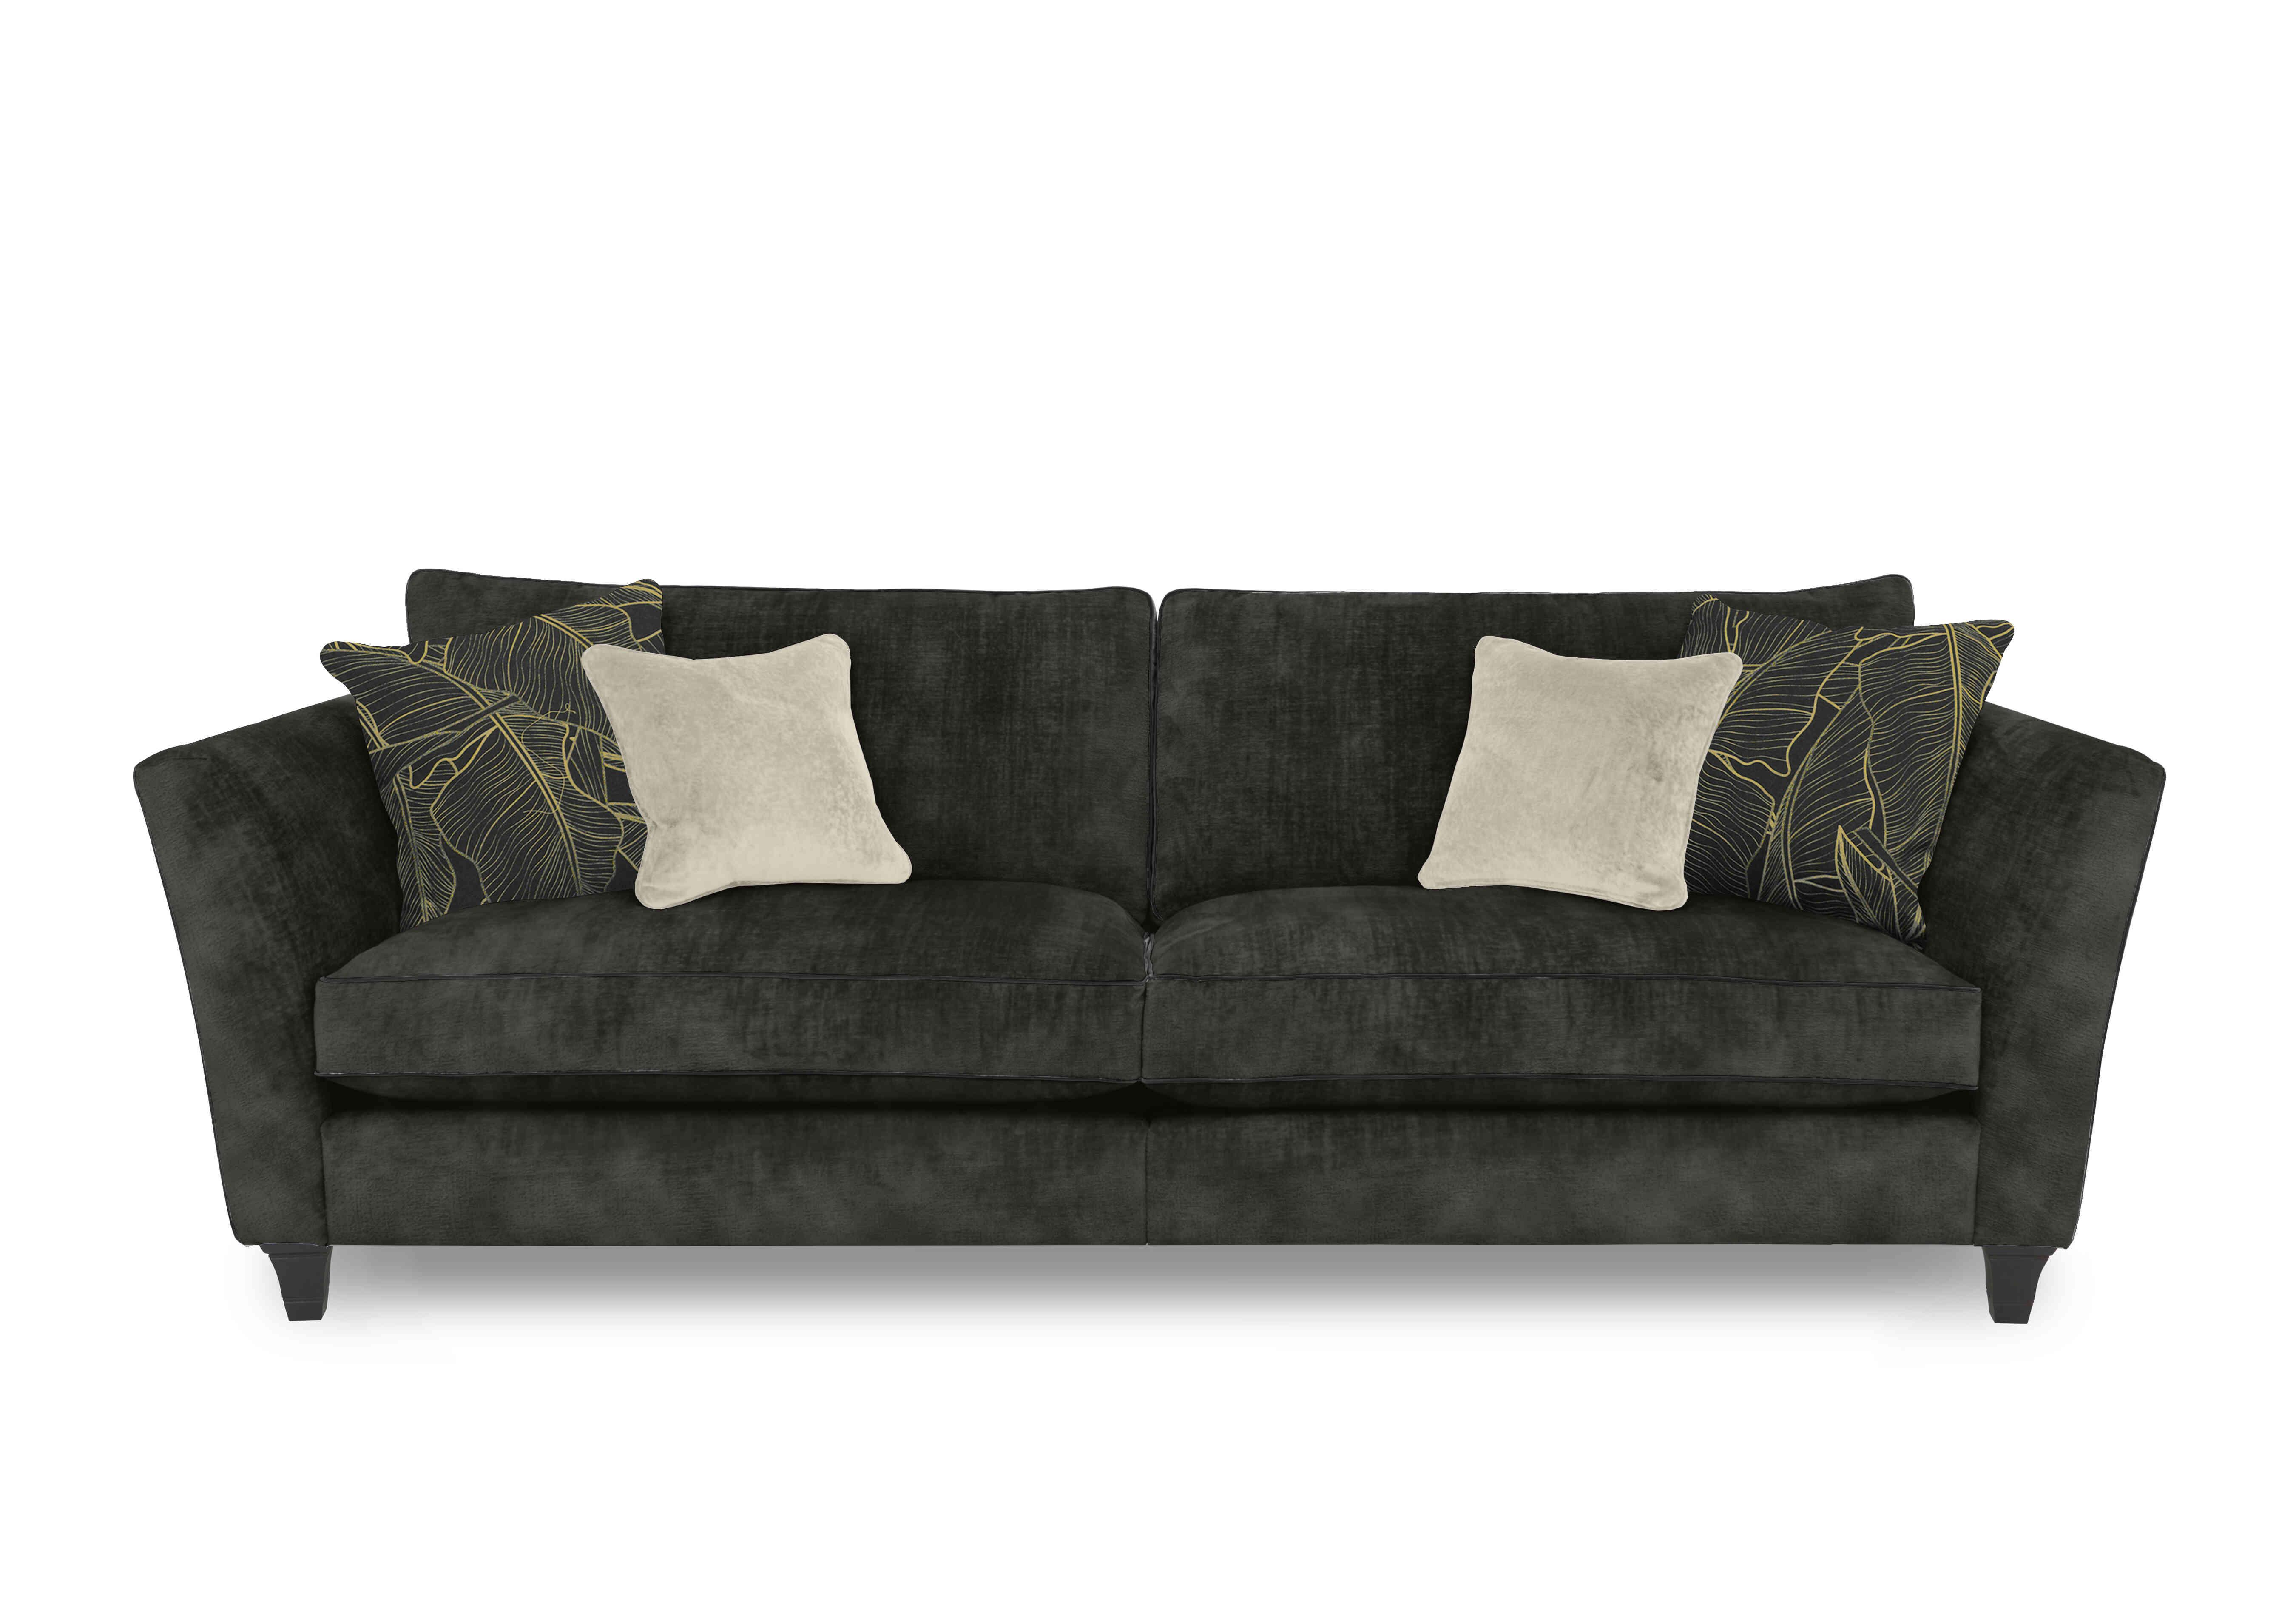 Modern Classics Victoria Park 4 Seater Split Frame Sofa in Verona Dark Truffle Sp Mf on Furniture Village